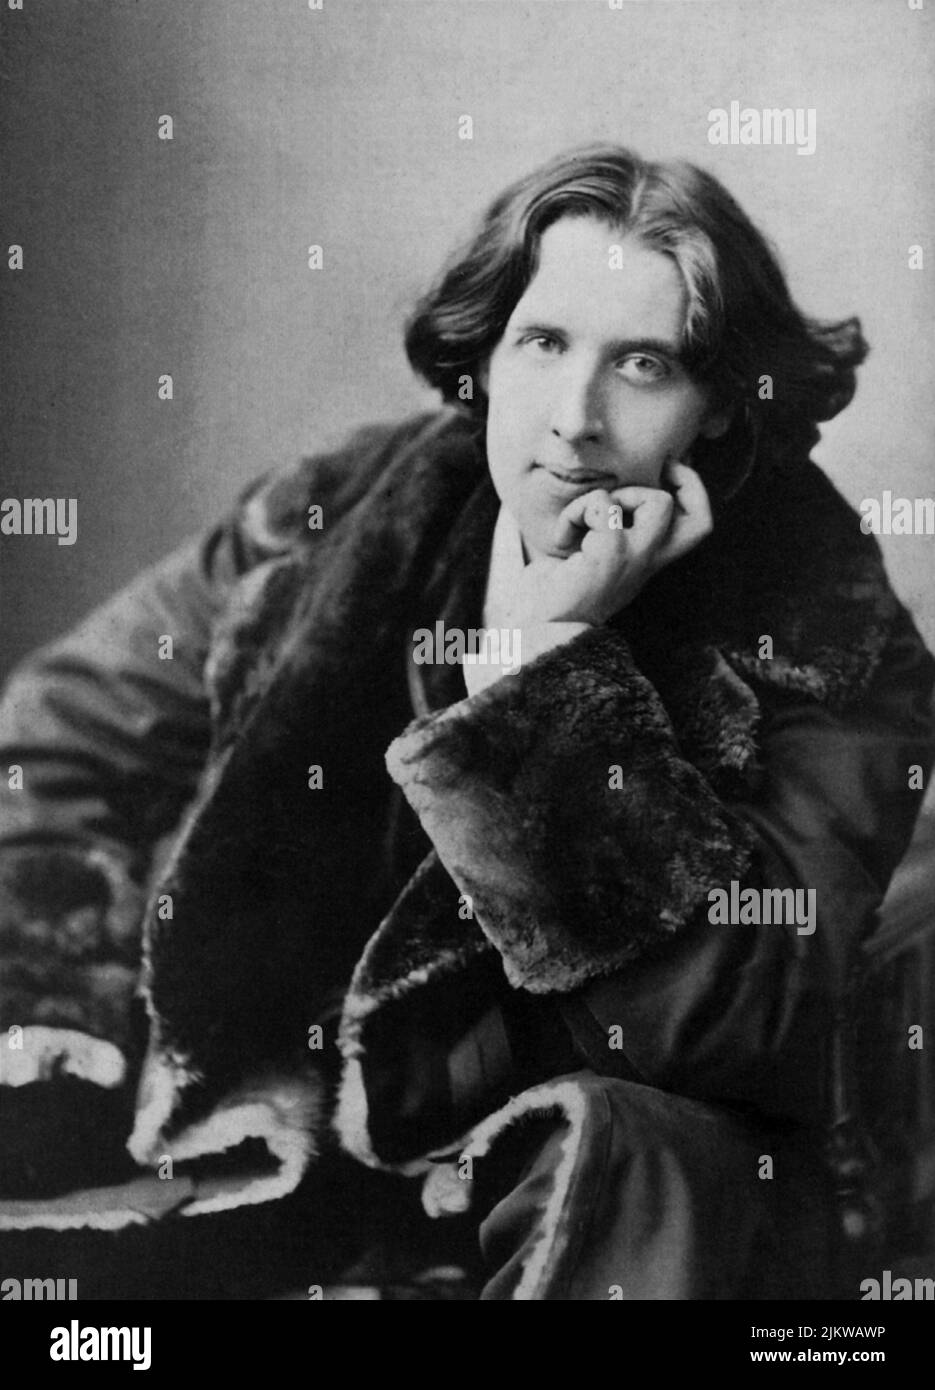 1882 , New York , USA   : The irish writer and dramatist OSCAR WILDE ( 1854 - 1900 ) , photo by Napoleon Sarony  - SCRITTORE - LETTERATURA - LITERATURE - POET - POETA - POESIA - DRAMMATURGO - playwriter - play-writer - TEATRO - THEATER - POETRY  - DANDY - GAY - HOMOSEXUALITY - HOMOSEXUAL - omosessuale - omosessualità  - fur - pelliccia ----  Archivio GBB Stock Photo